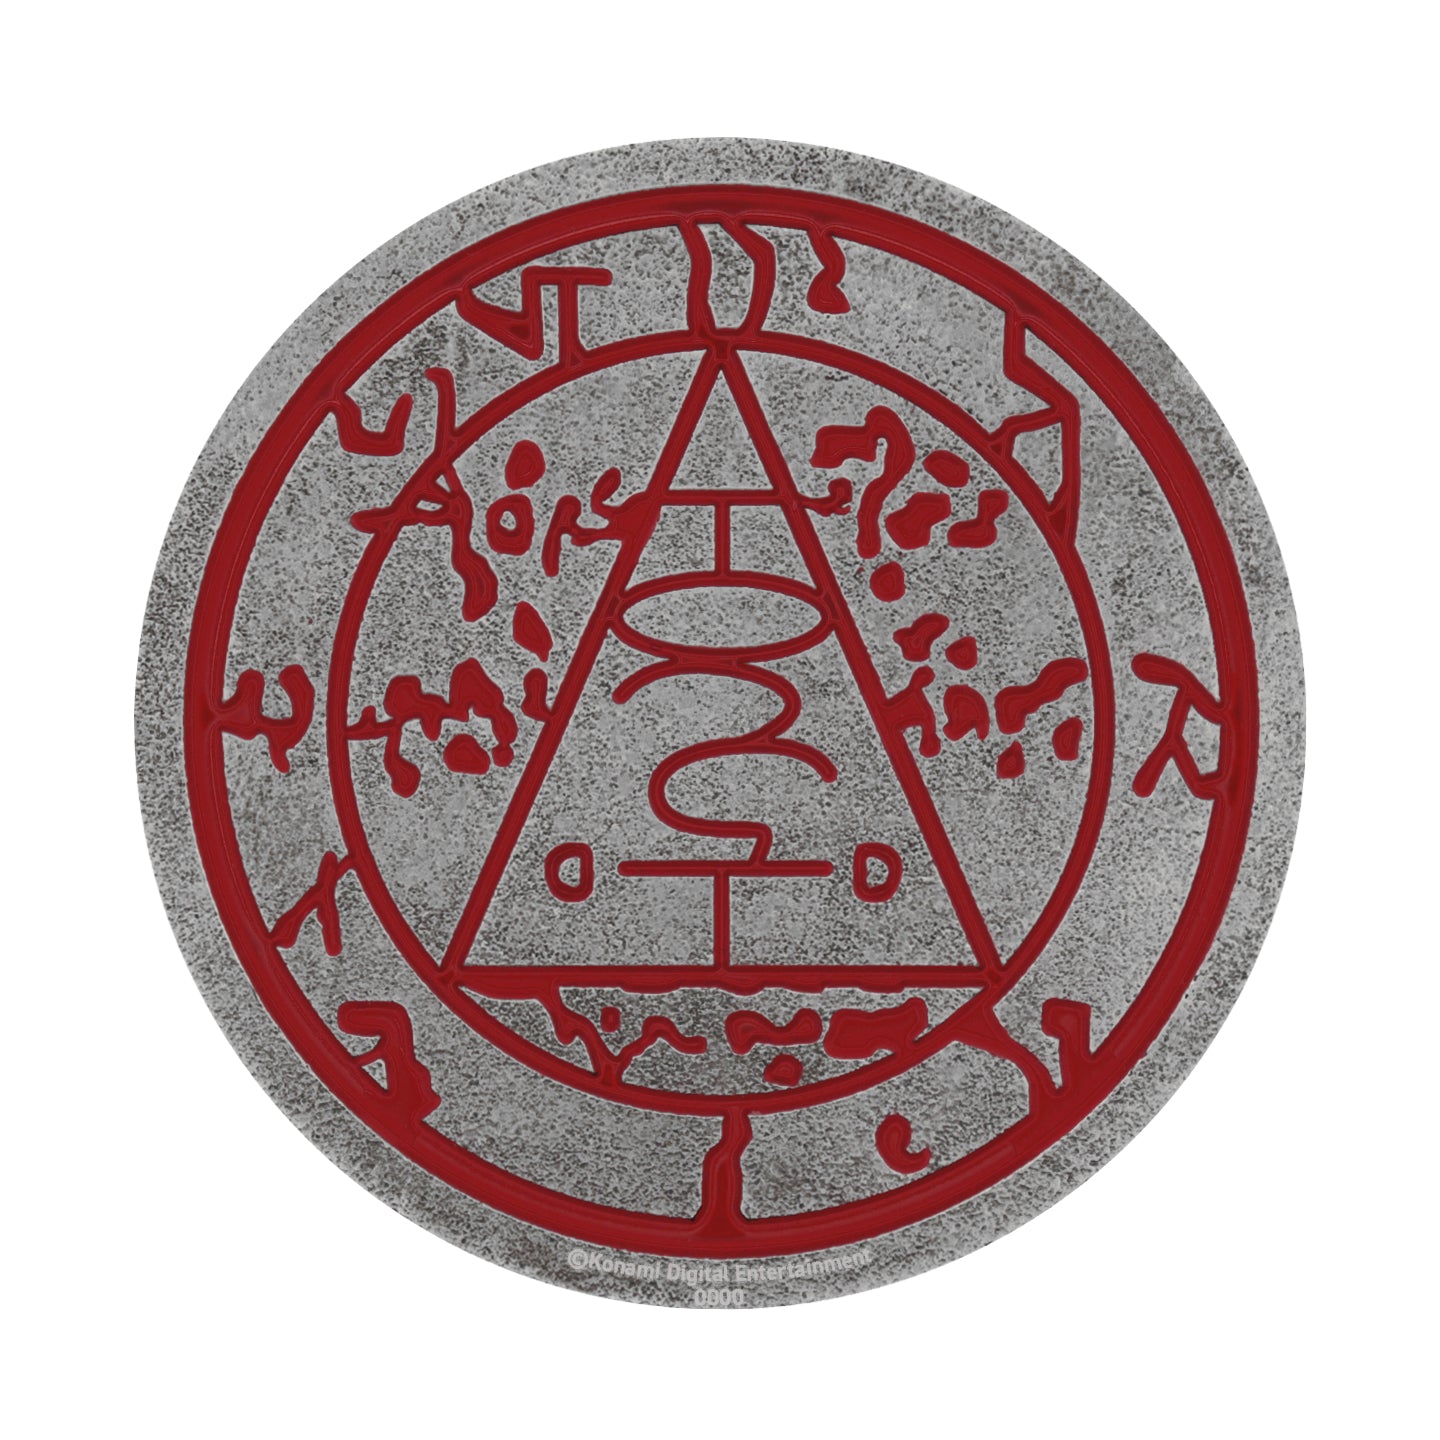 Silent Hill Seal of Metatron medallion from Fanattik